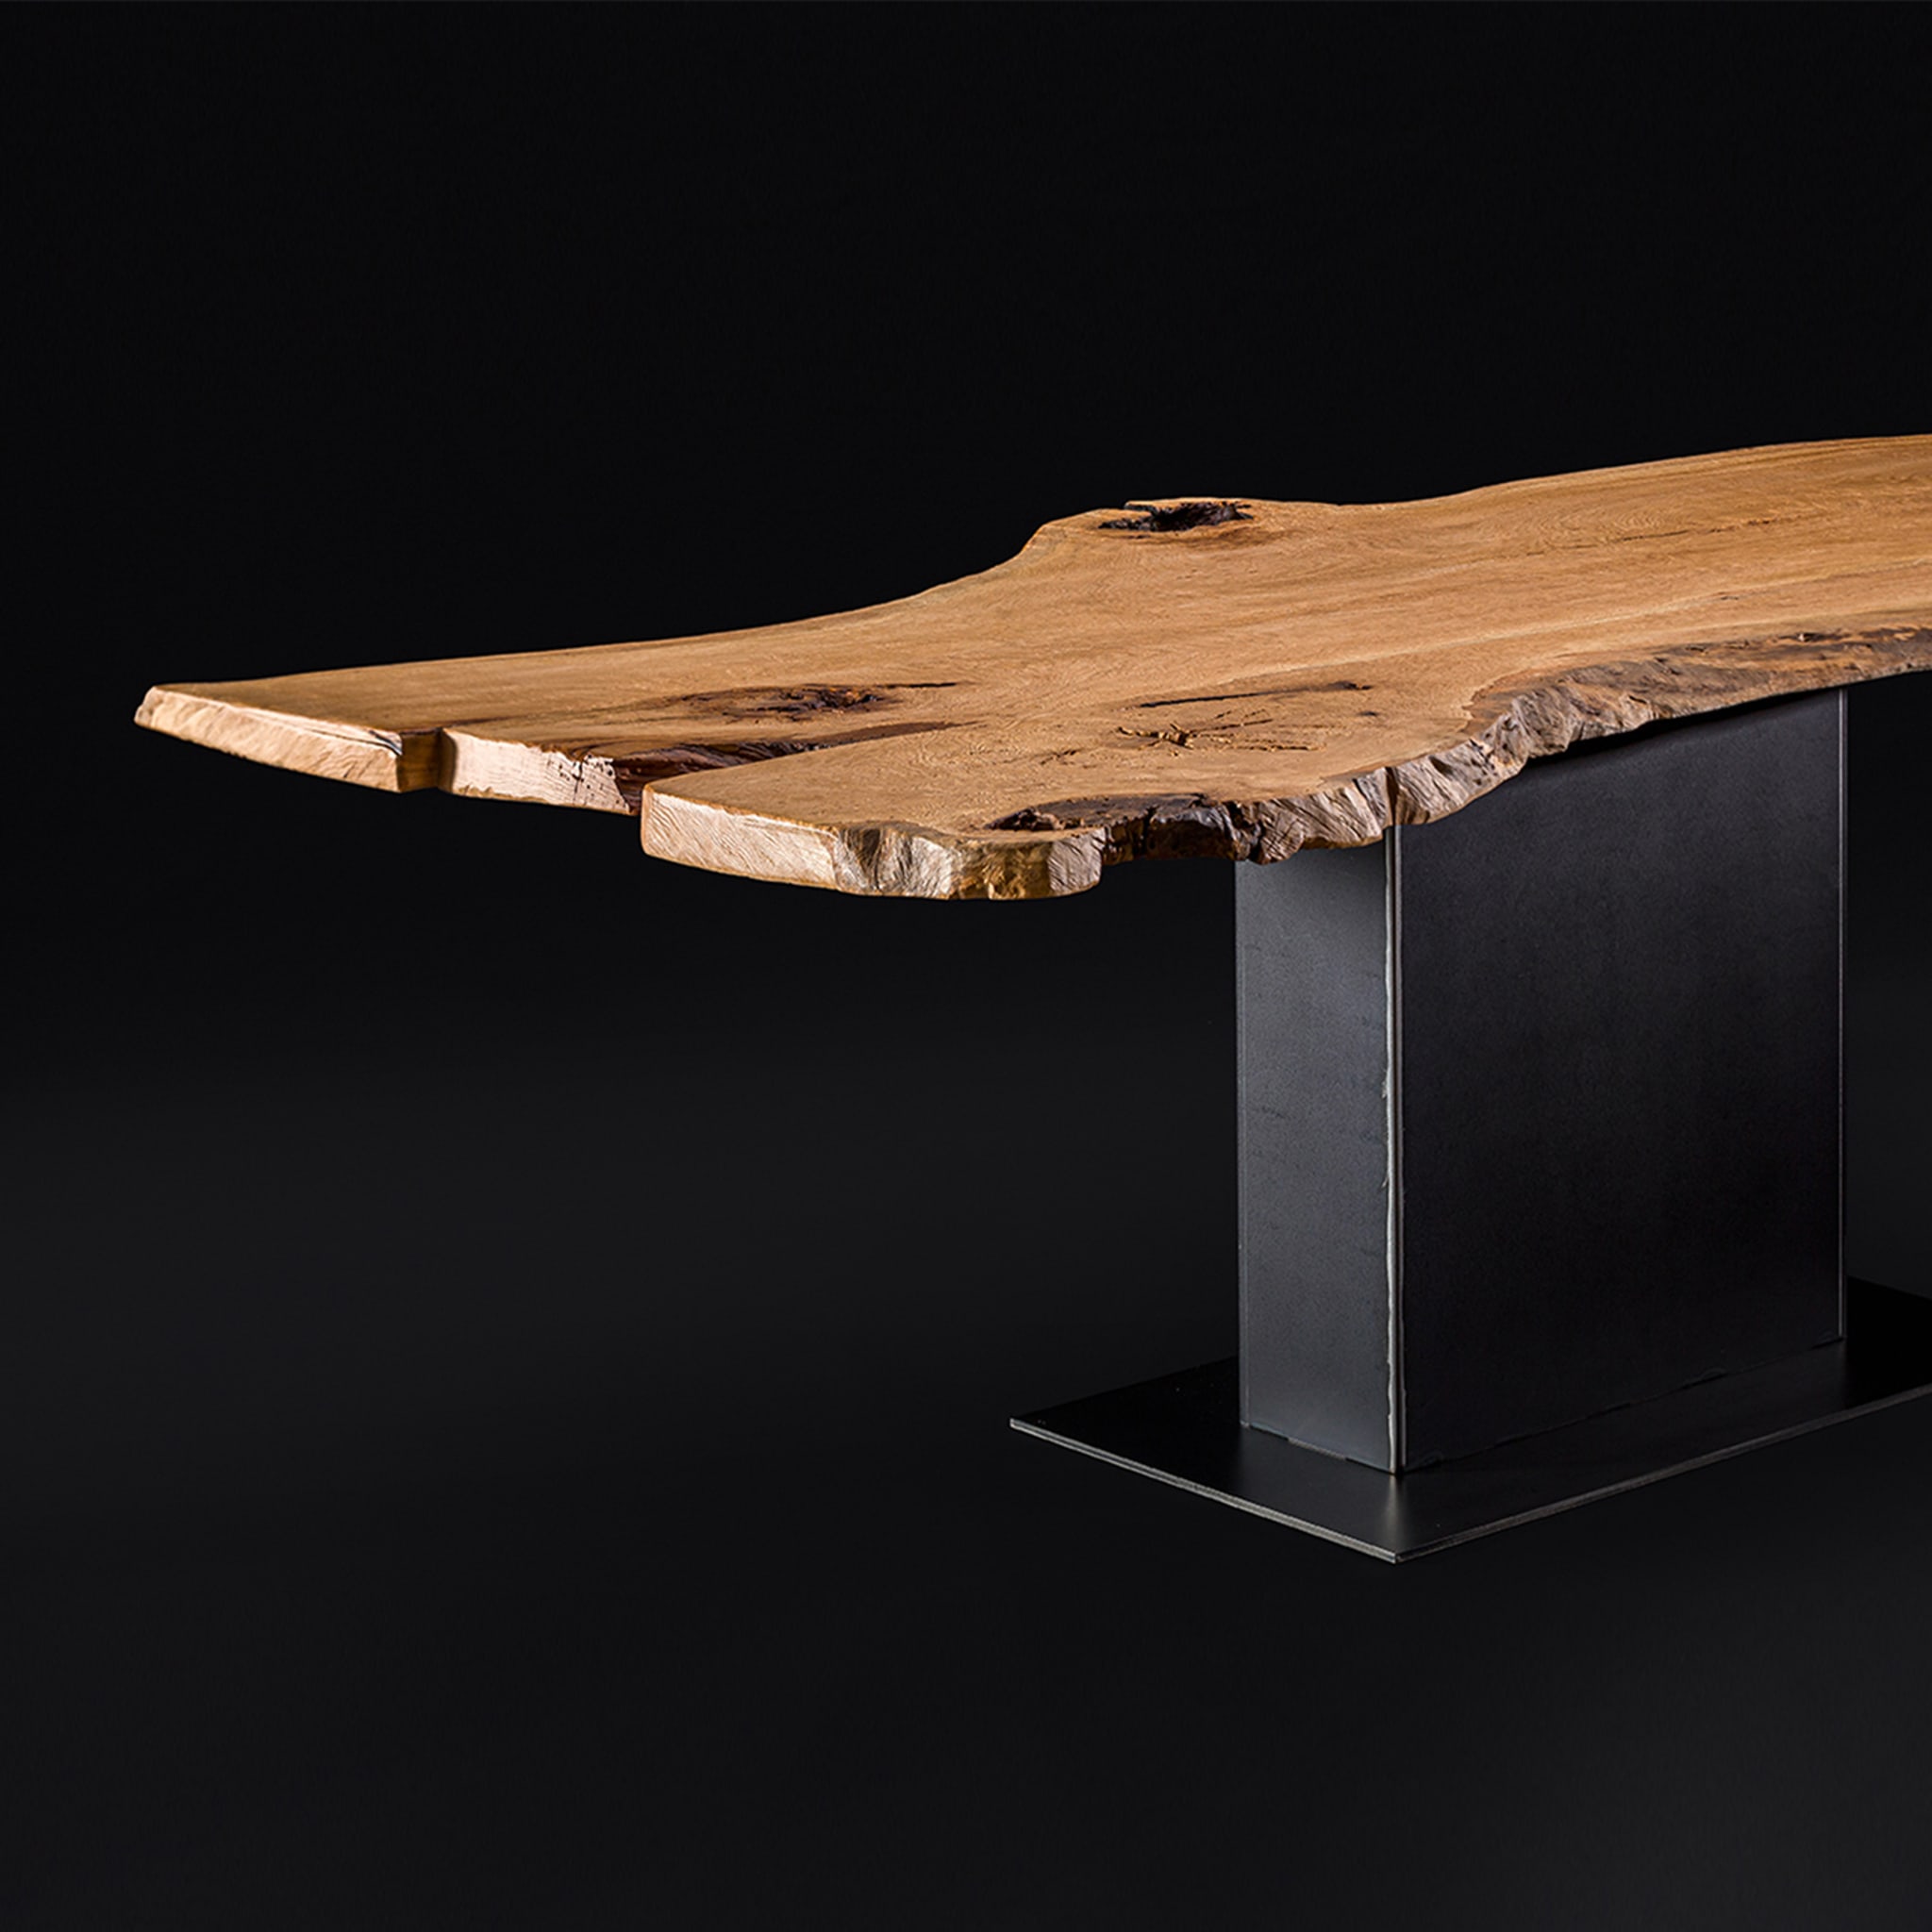 Oak dining table #1 - Alternative view 3